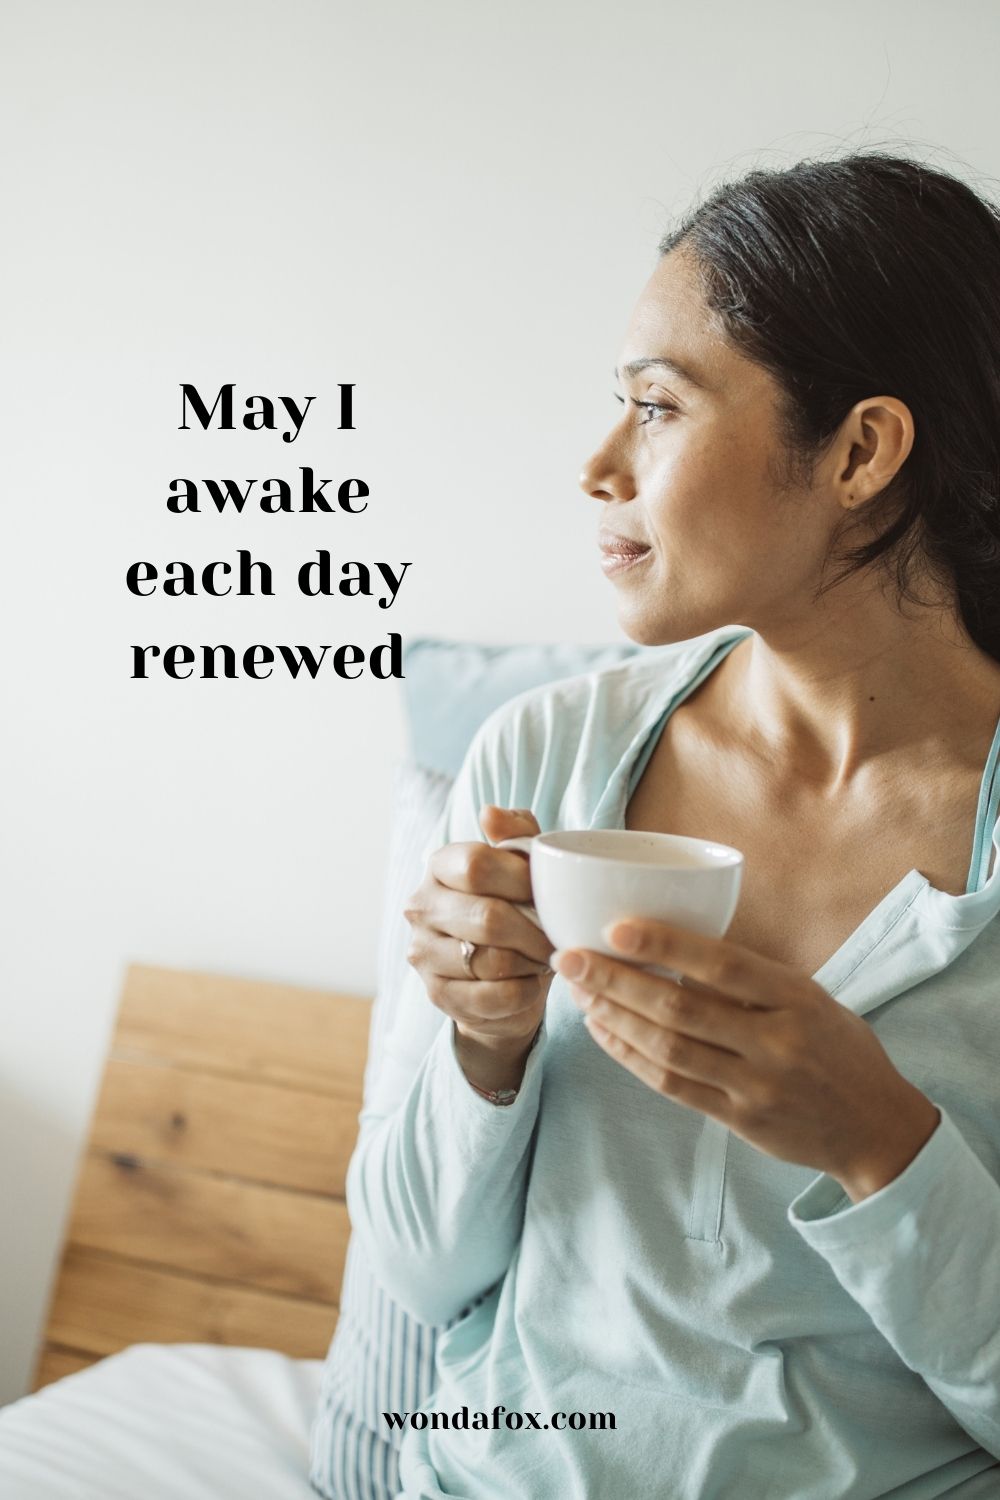 May I awake each day renewed